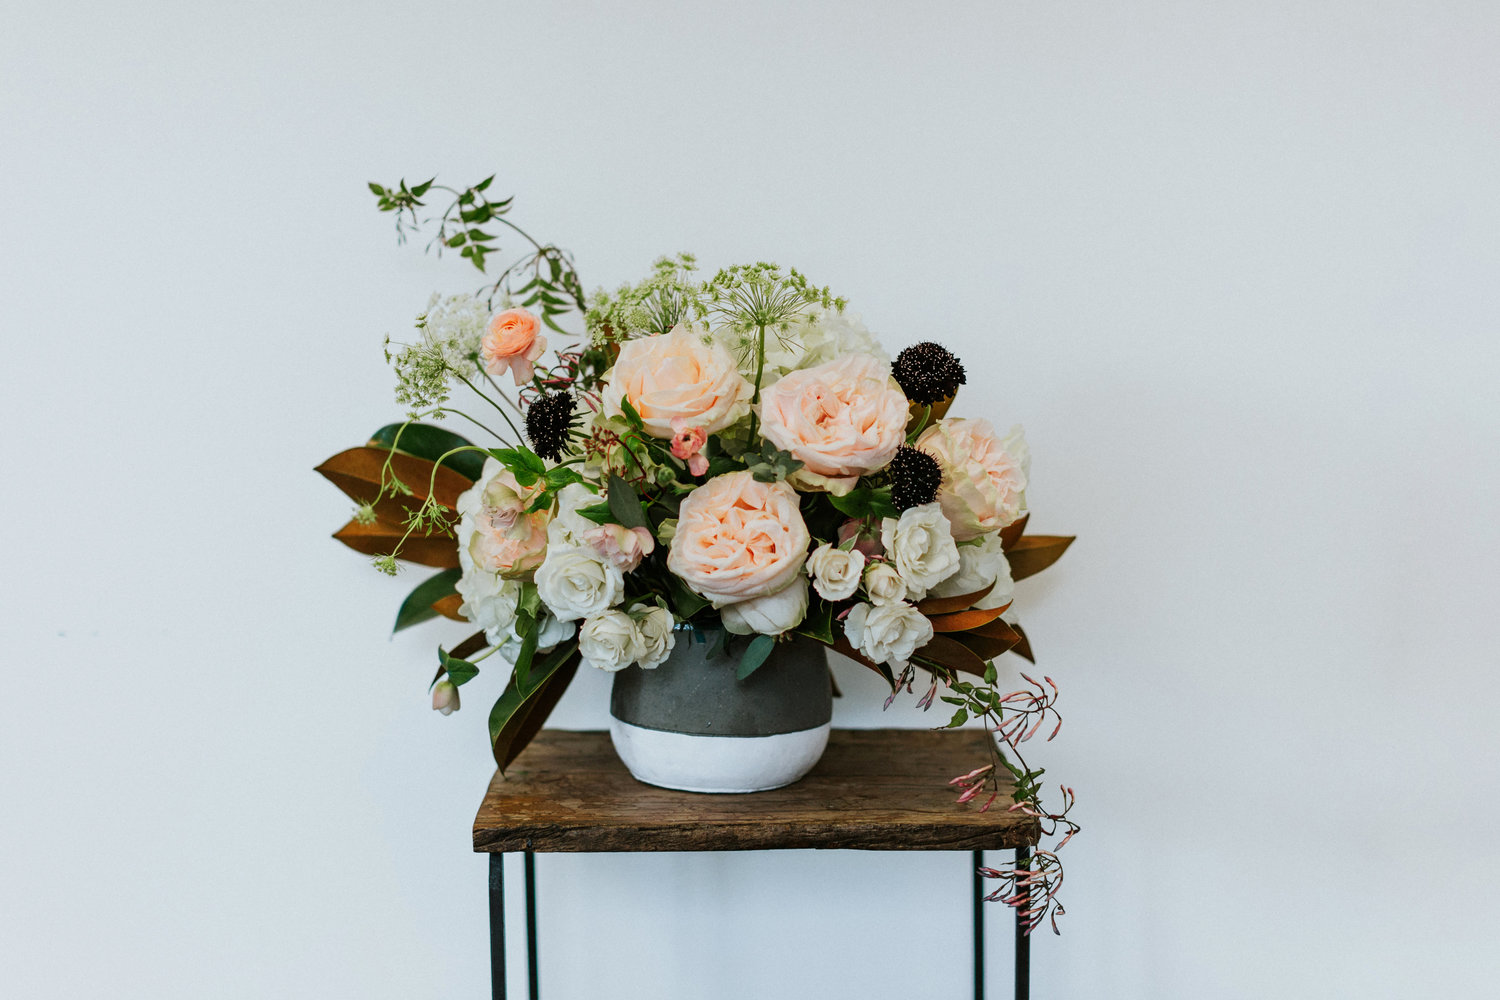 floral-design-studio-creates-original-flower-arrangements